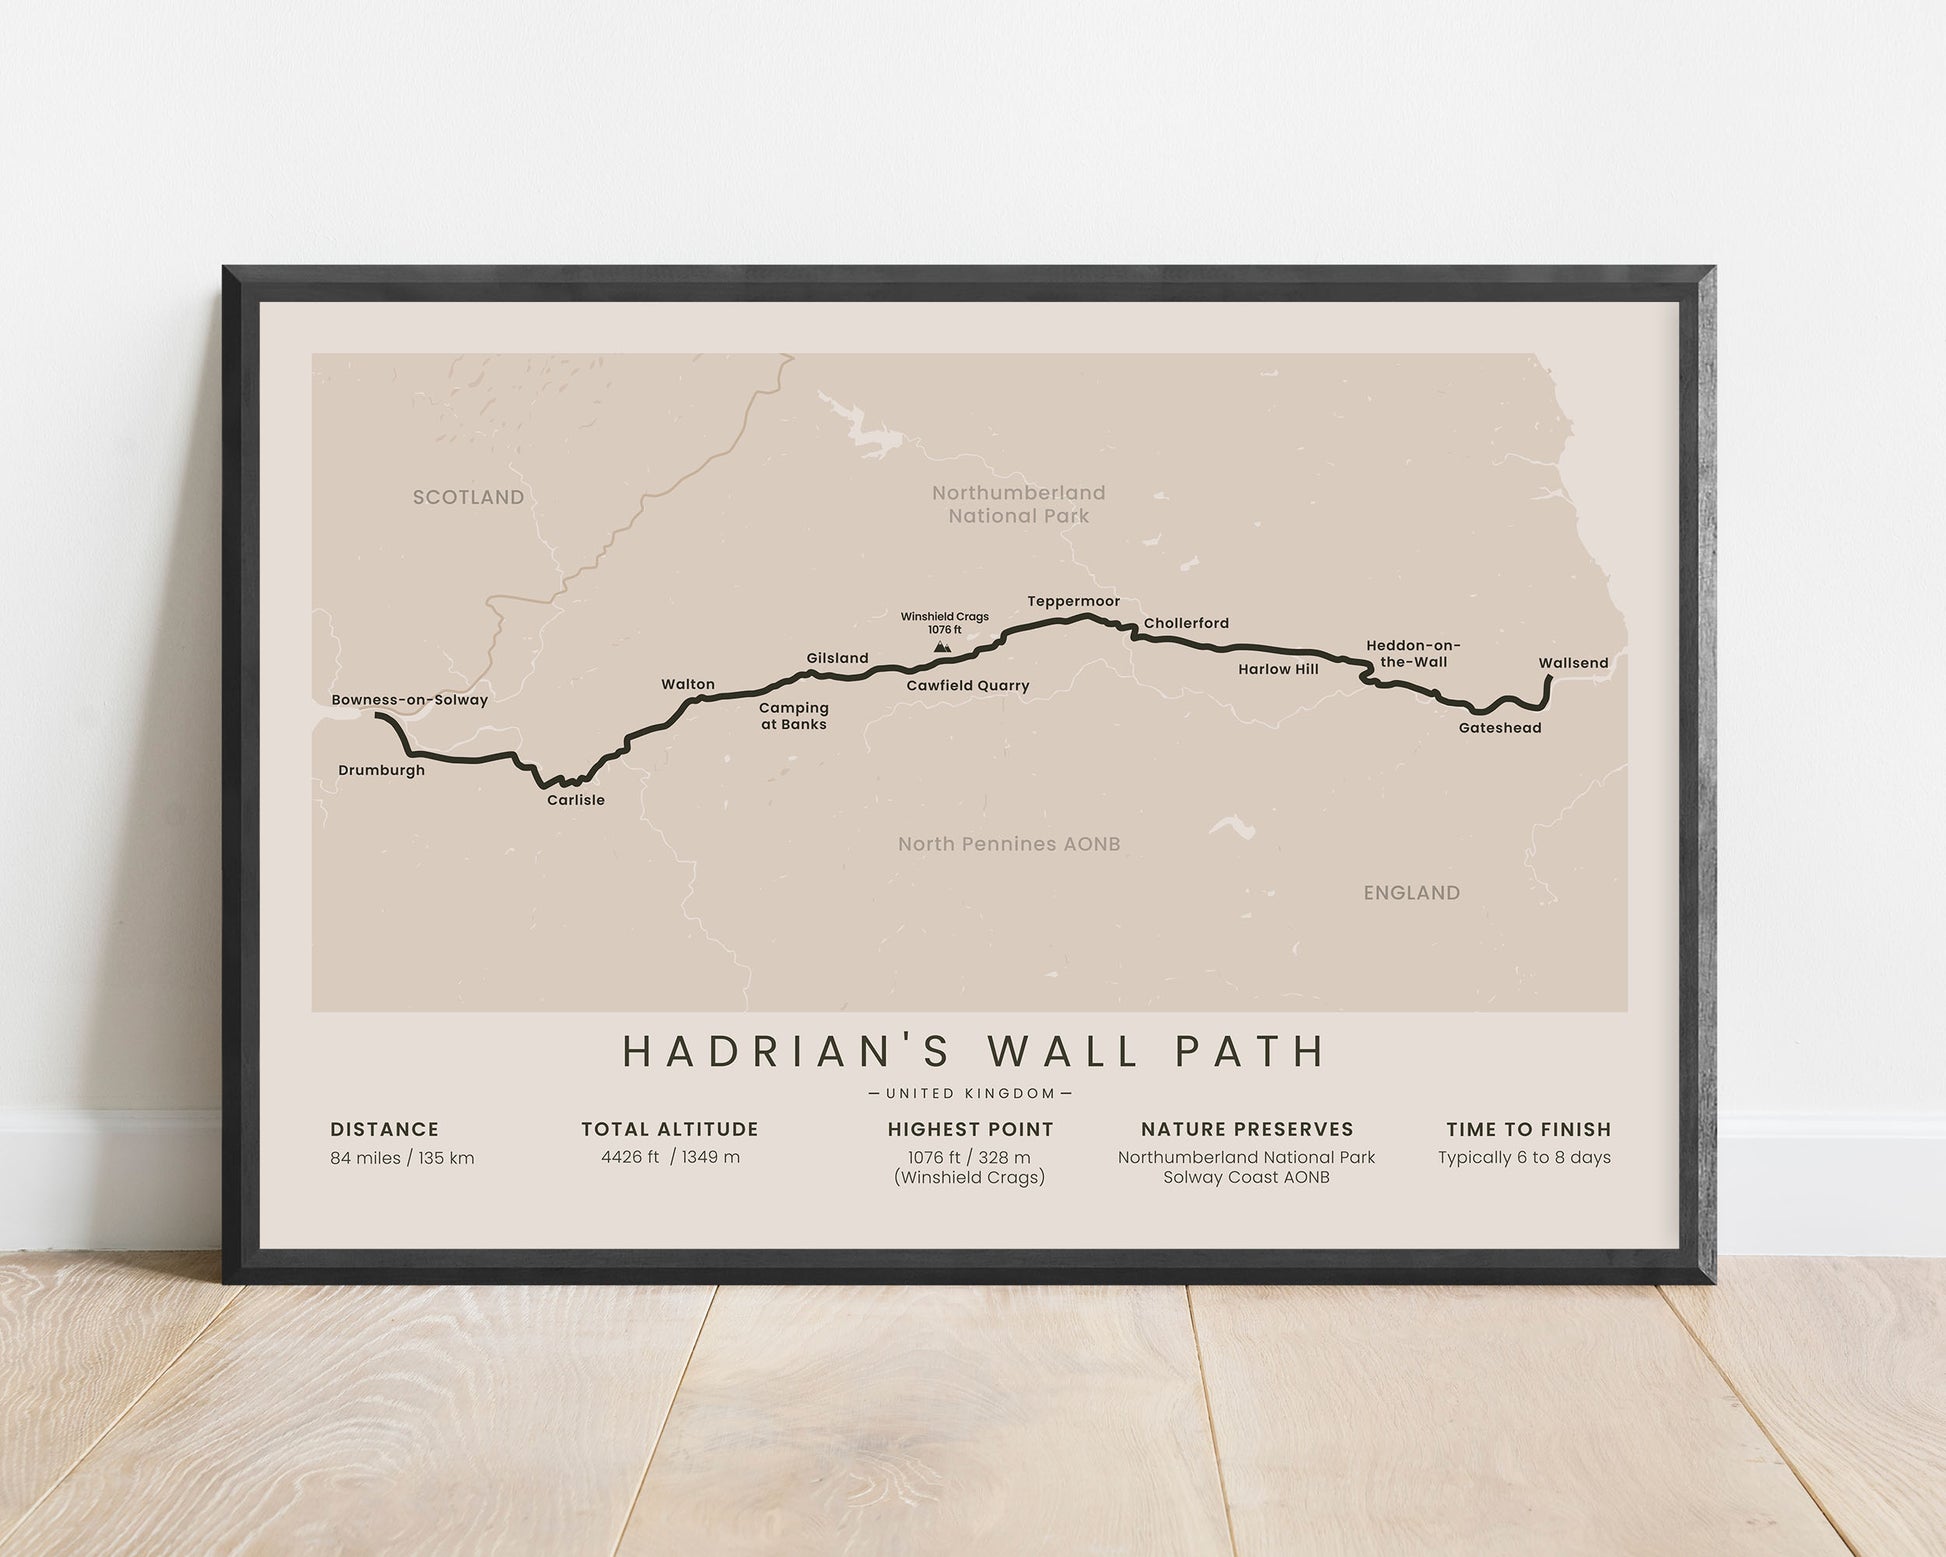 Hadrian's Wall Path (United Kingdom) thru-hike art with beige background